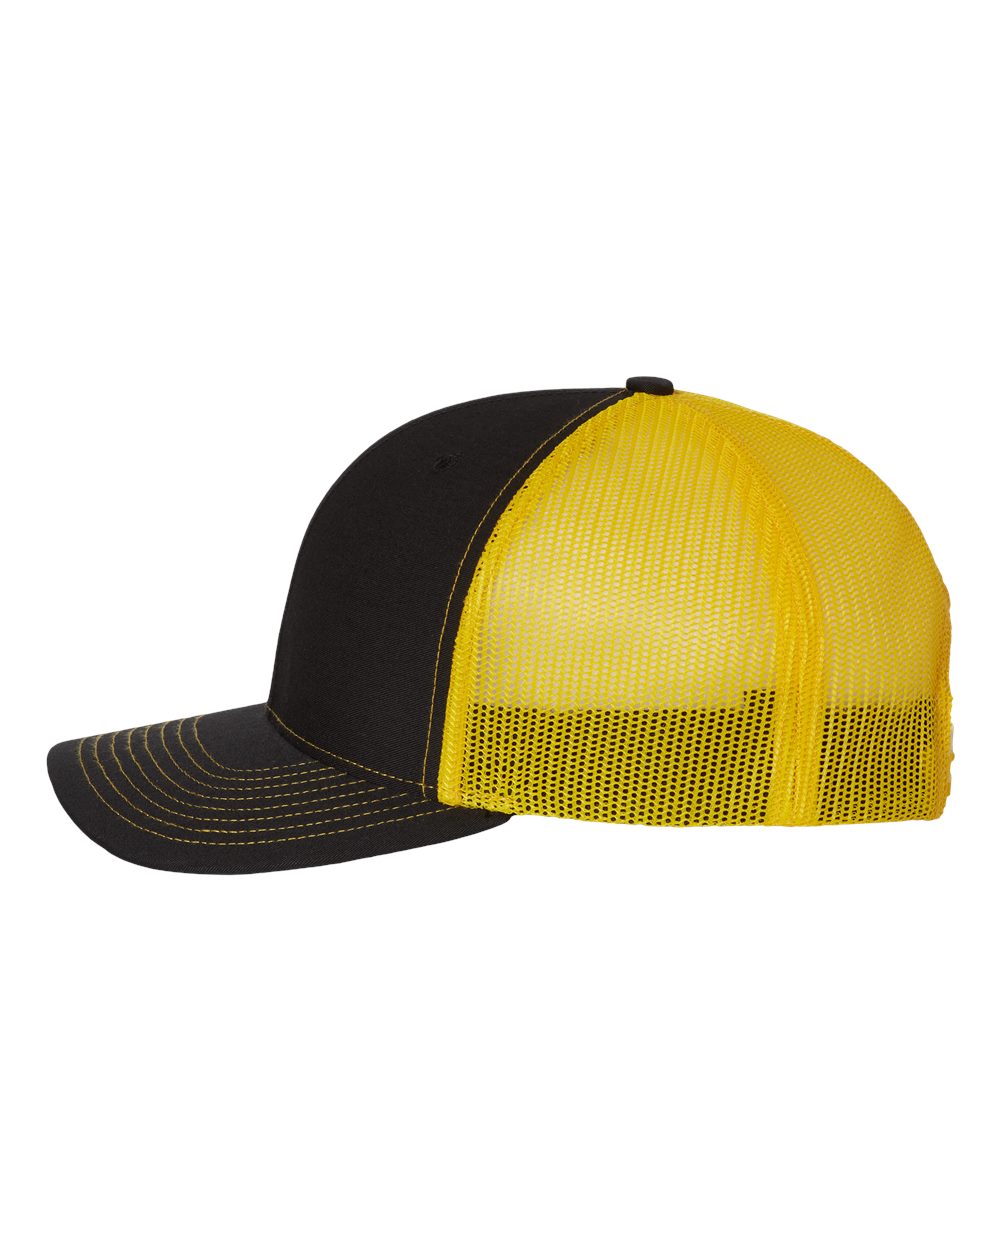 Richardson Adjustable Customized Snapback Trucker Caps, Black Yellow